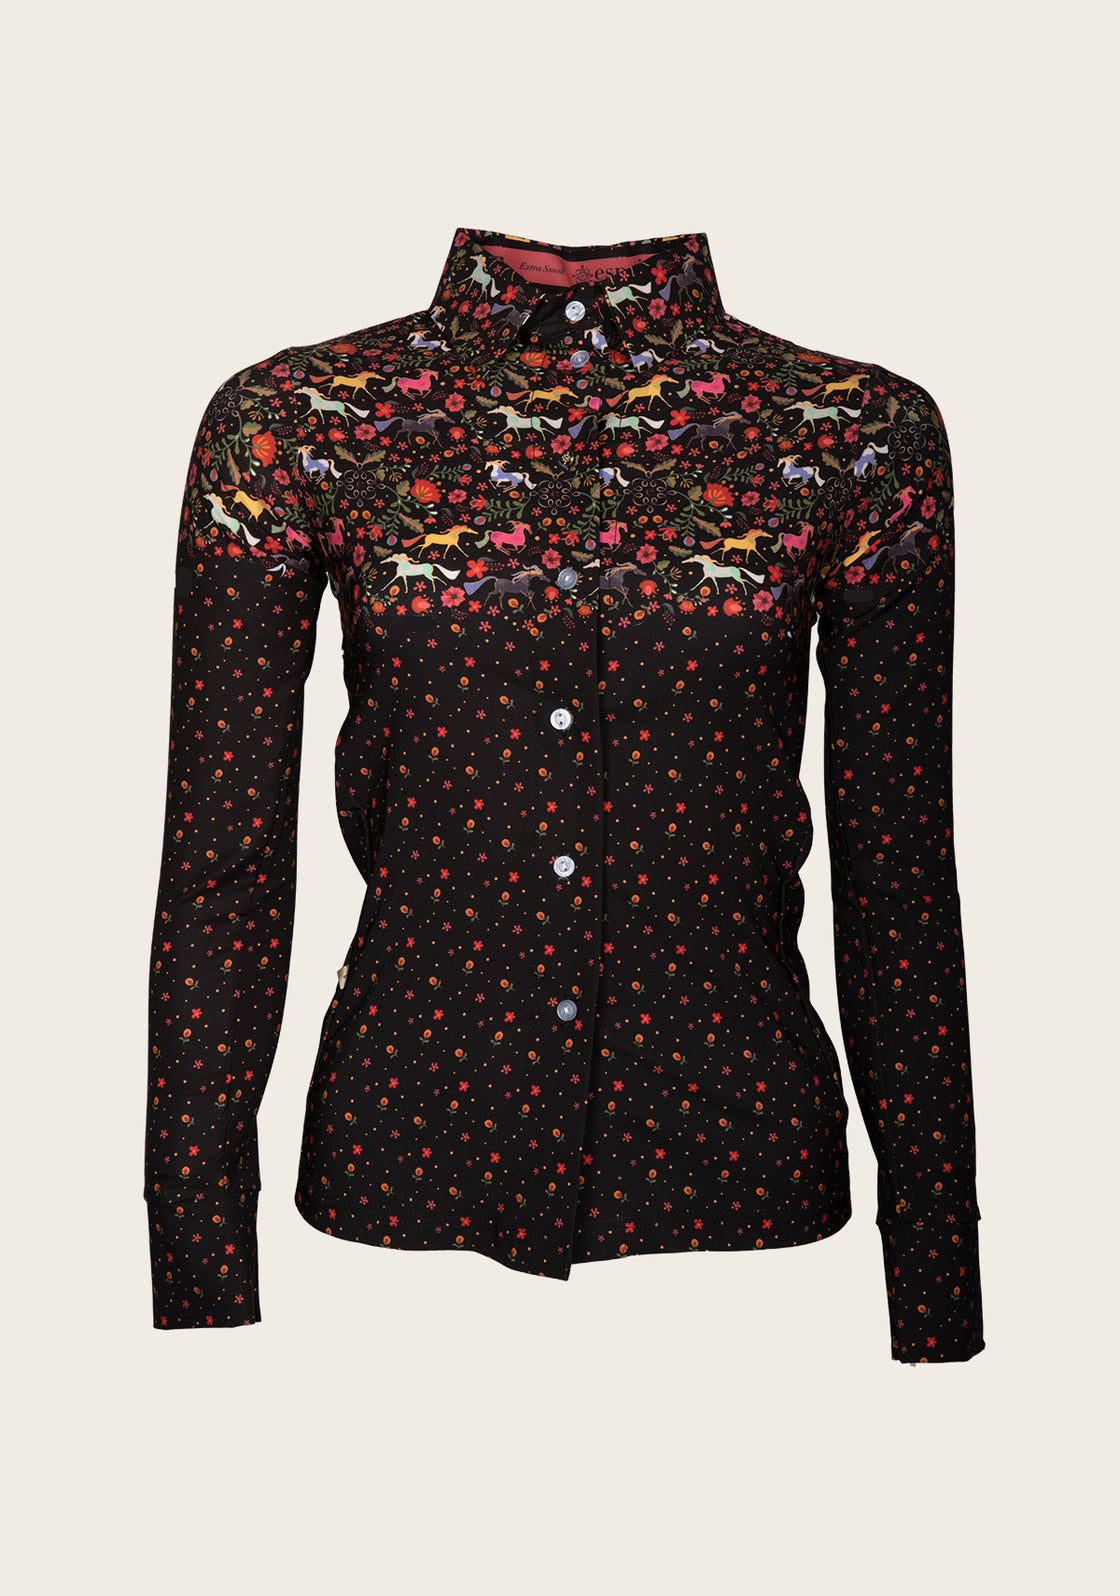 Joie Black Ladies’ Button Shirt